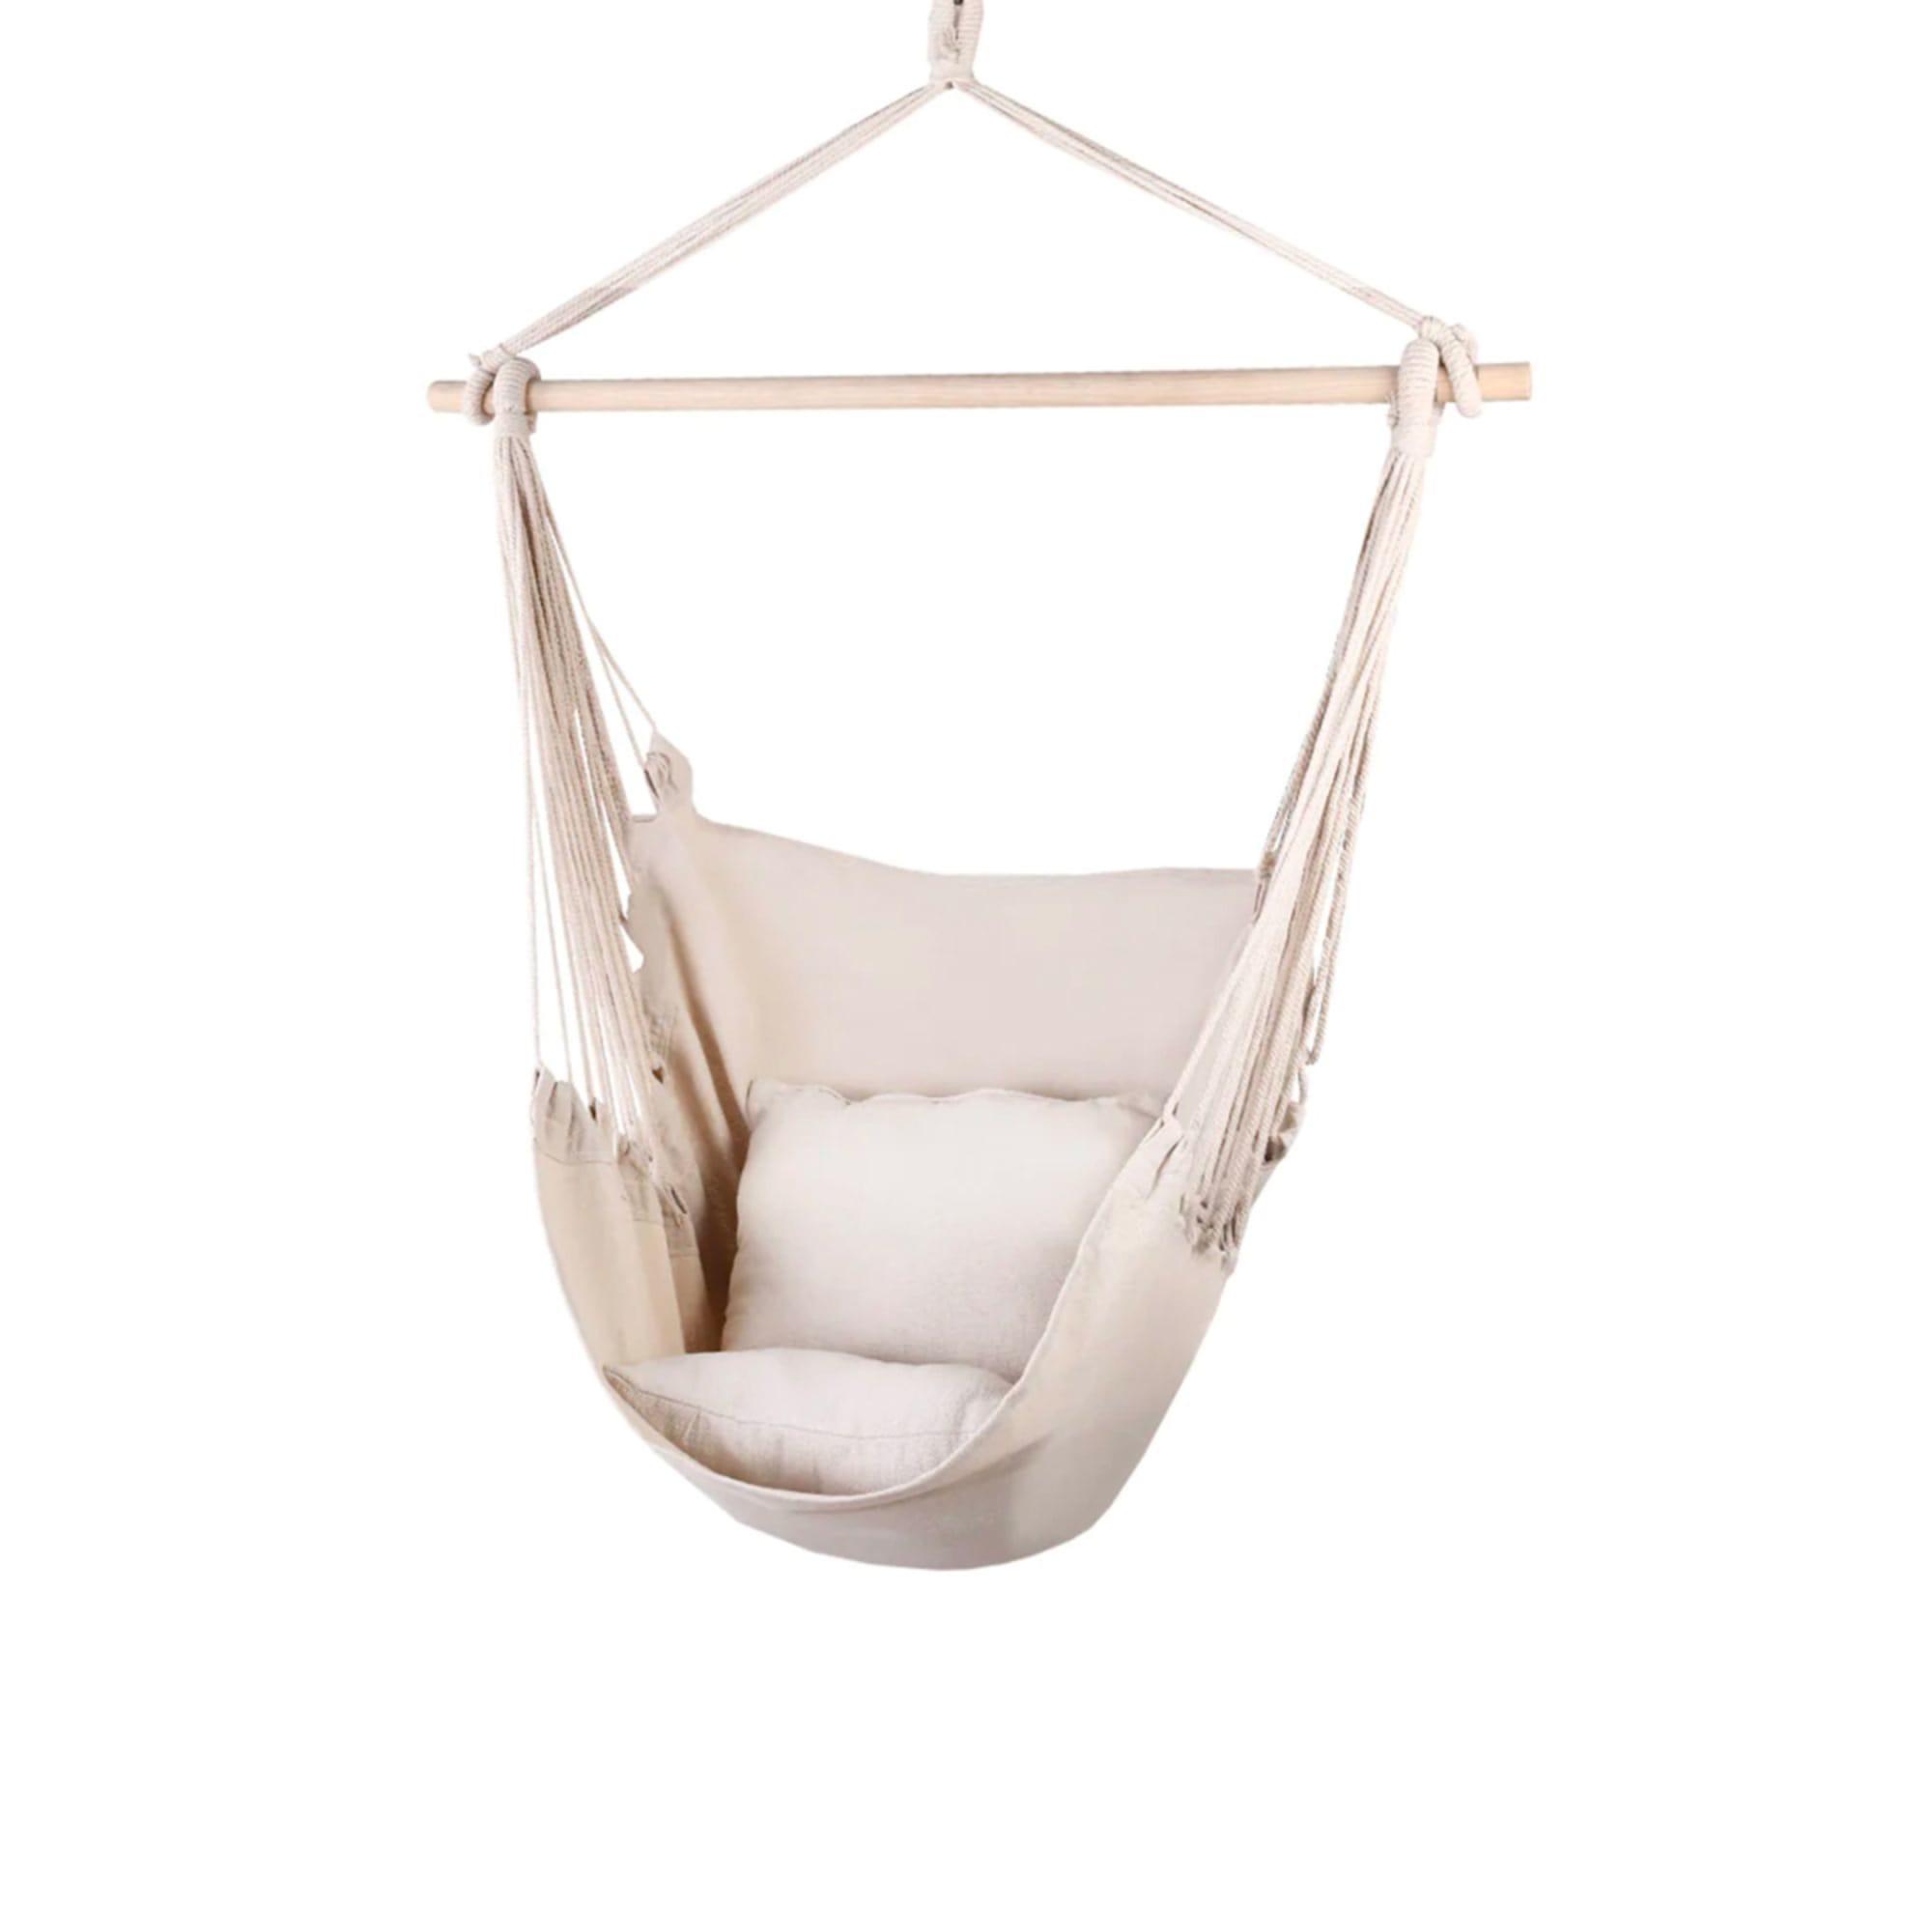 Gardeon Swing Chair Hammock with 2 Cushions Cream Image 3